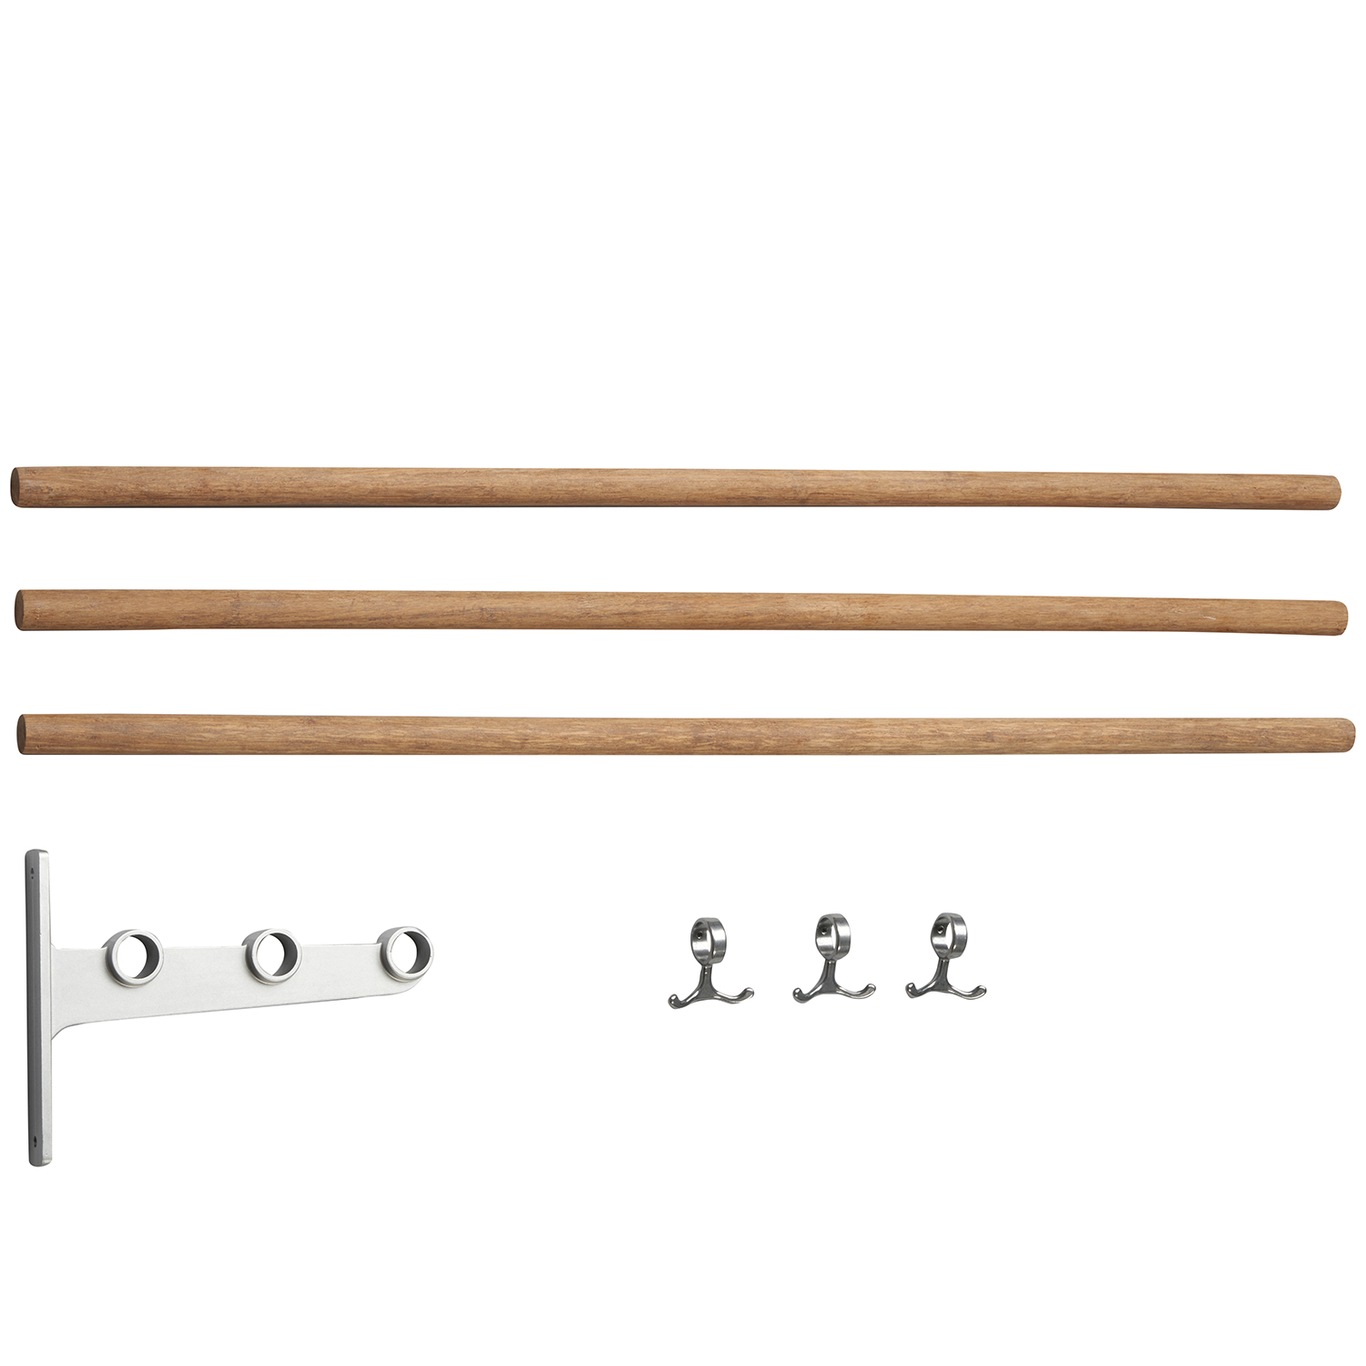 Nostalgi Extension Part For Hat Rack/ Shoe Rack, Aluminium Påbyggingsdel Til Hattehylle / Skohylle, Aluminium Aluminium Bamboo